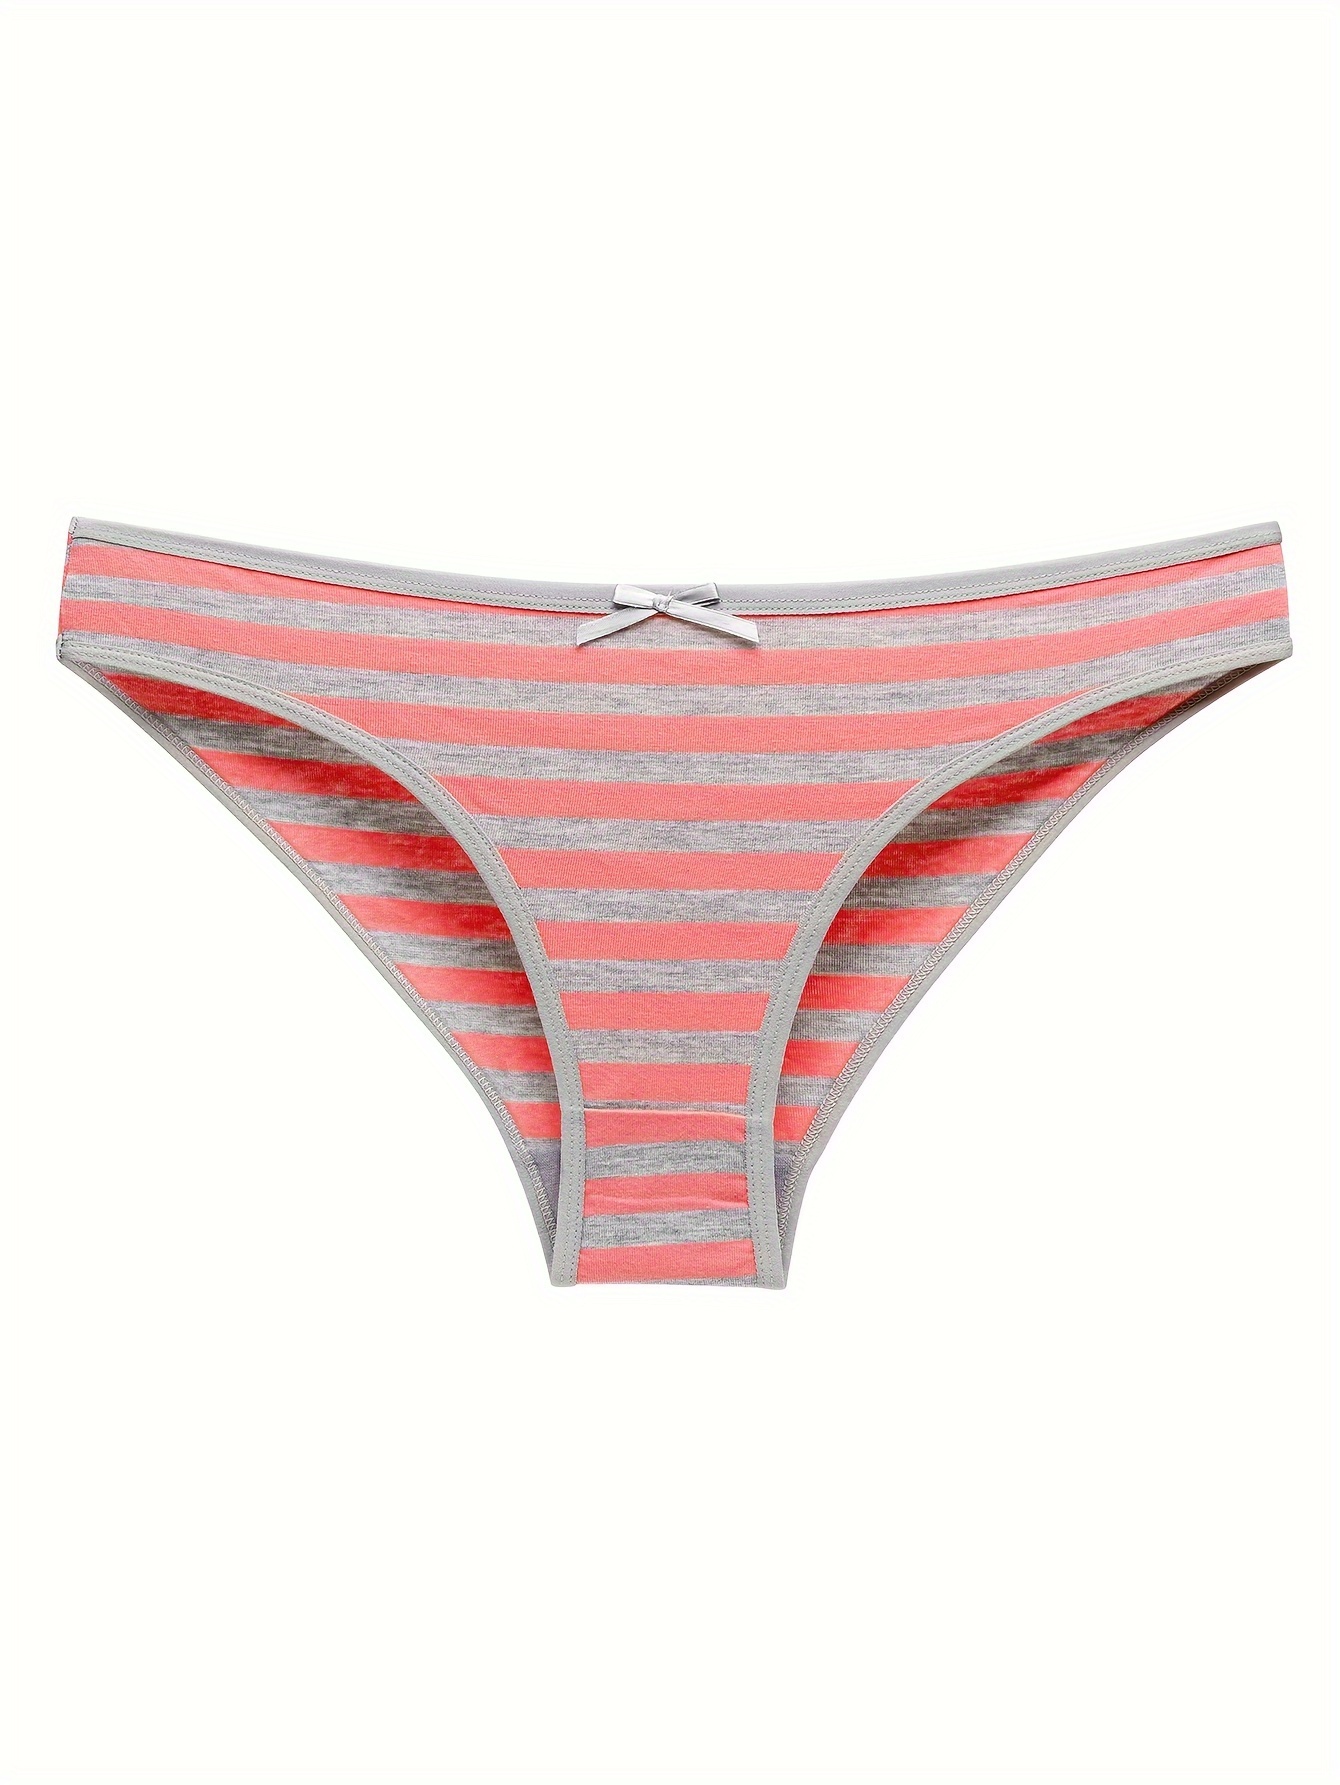 Color Weave Stripes Cotton Panties,Plus Size Striped Panty Woman